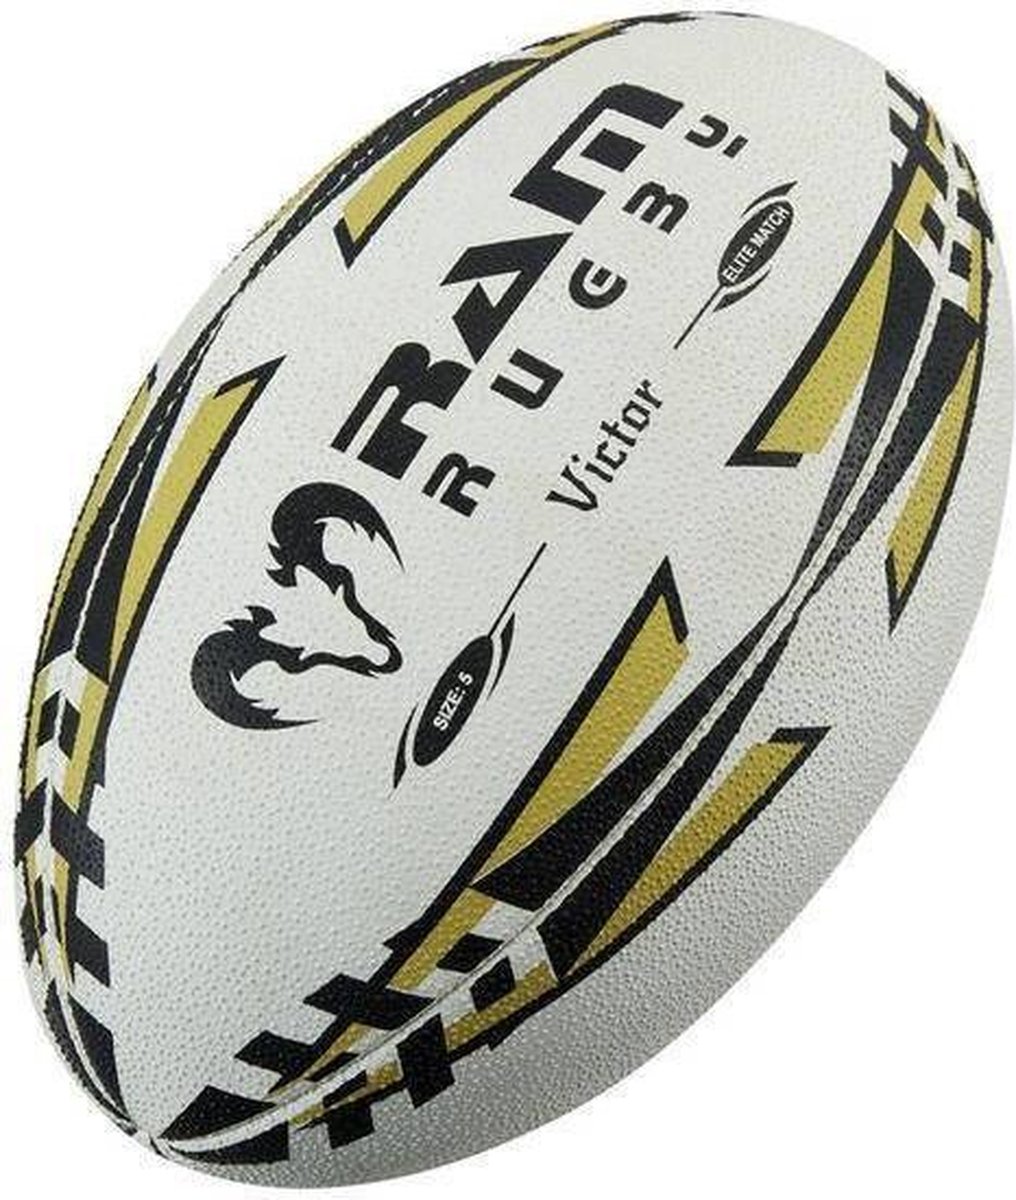 Victor Elite rugbybal - Ultieme wedstrijdbal - 3D grip - Maat 5